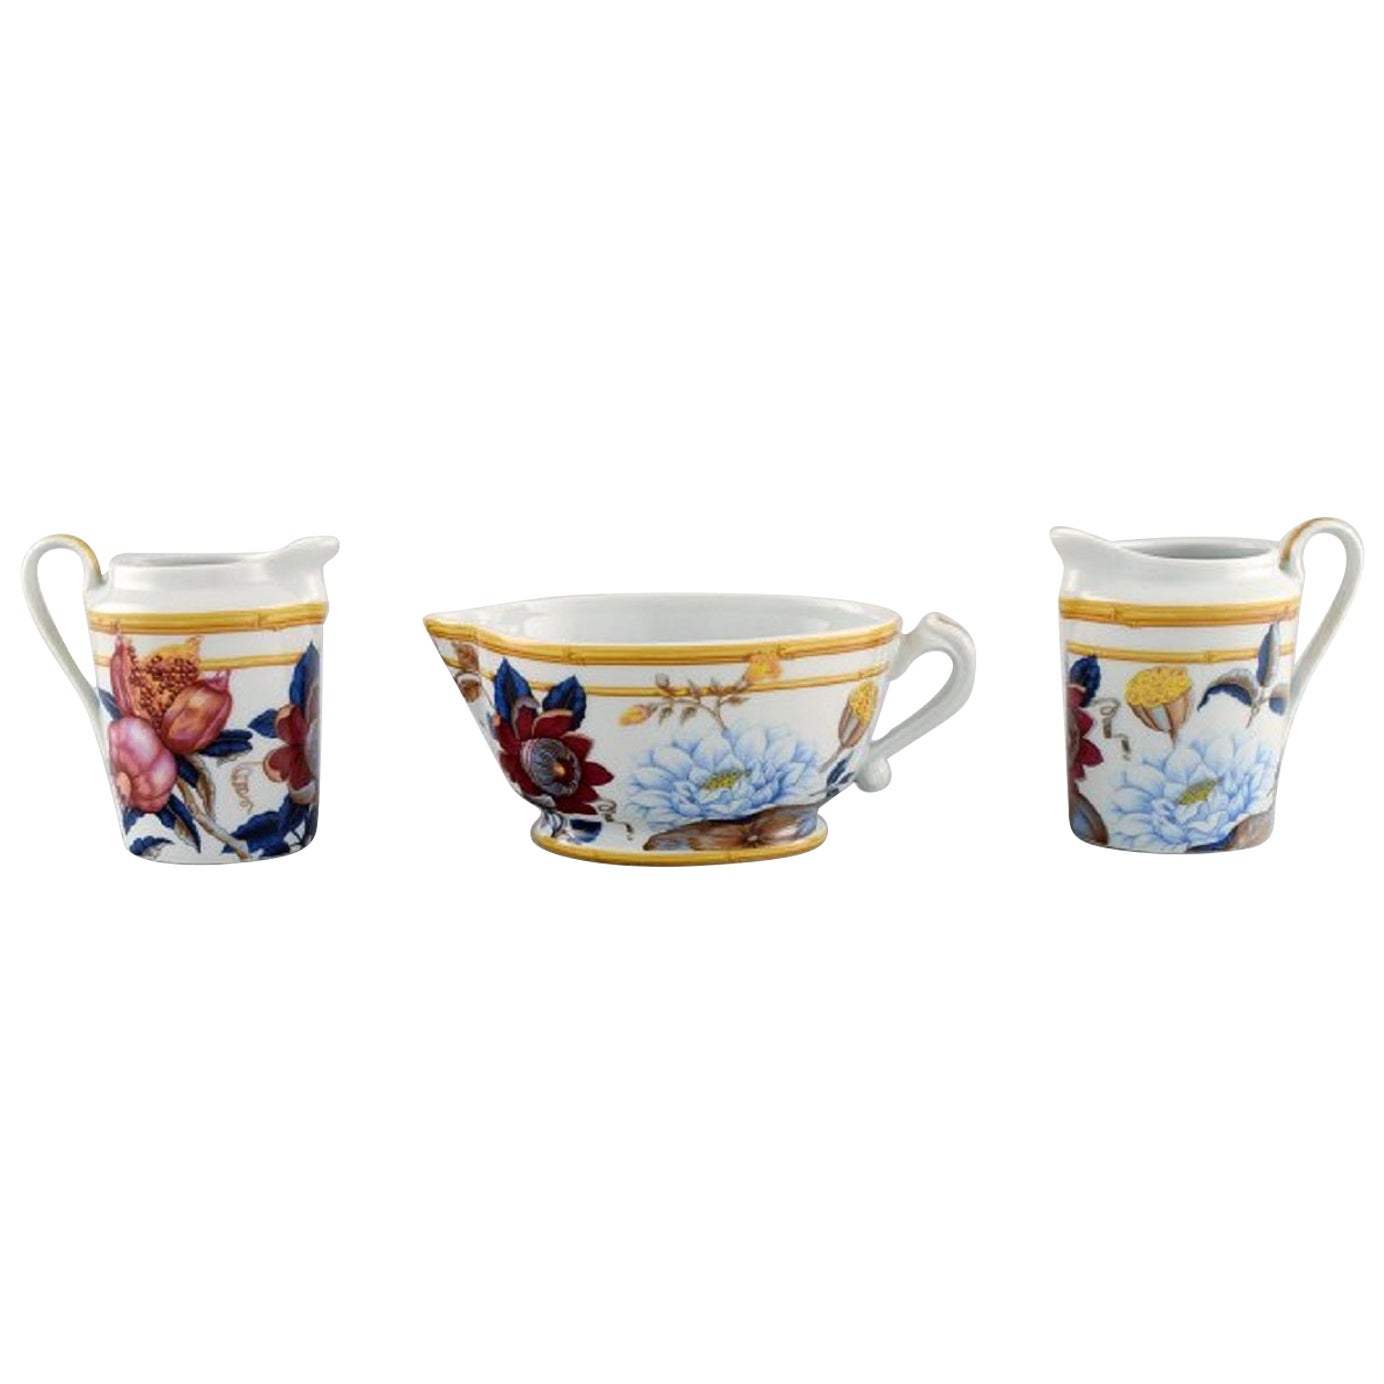 Porcelain of Paris. "Tropical Aurore". Three porcelain jugs with flowers.